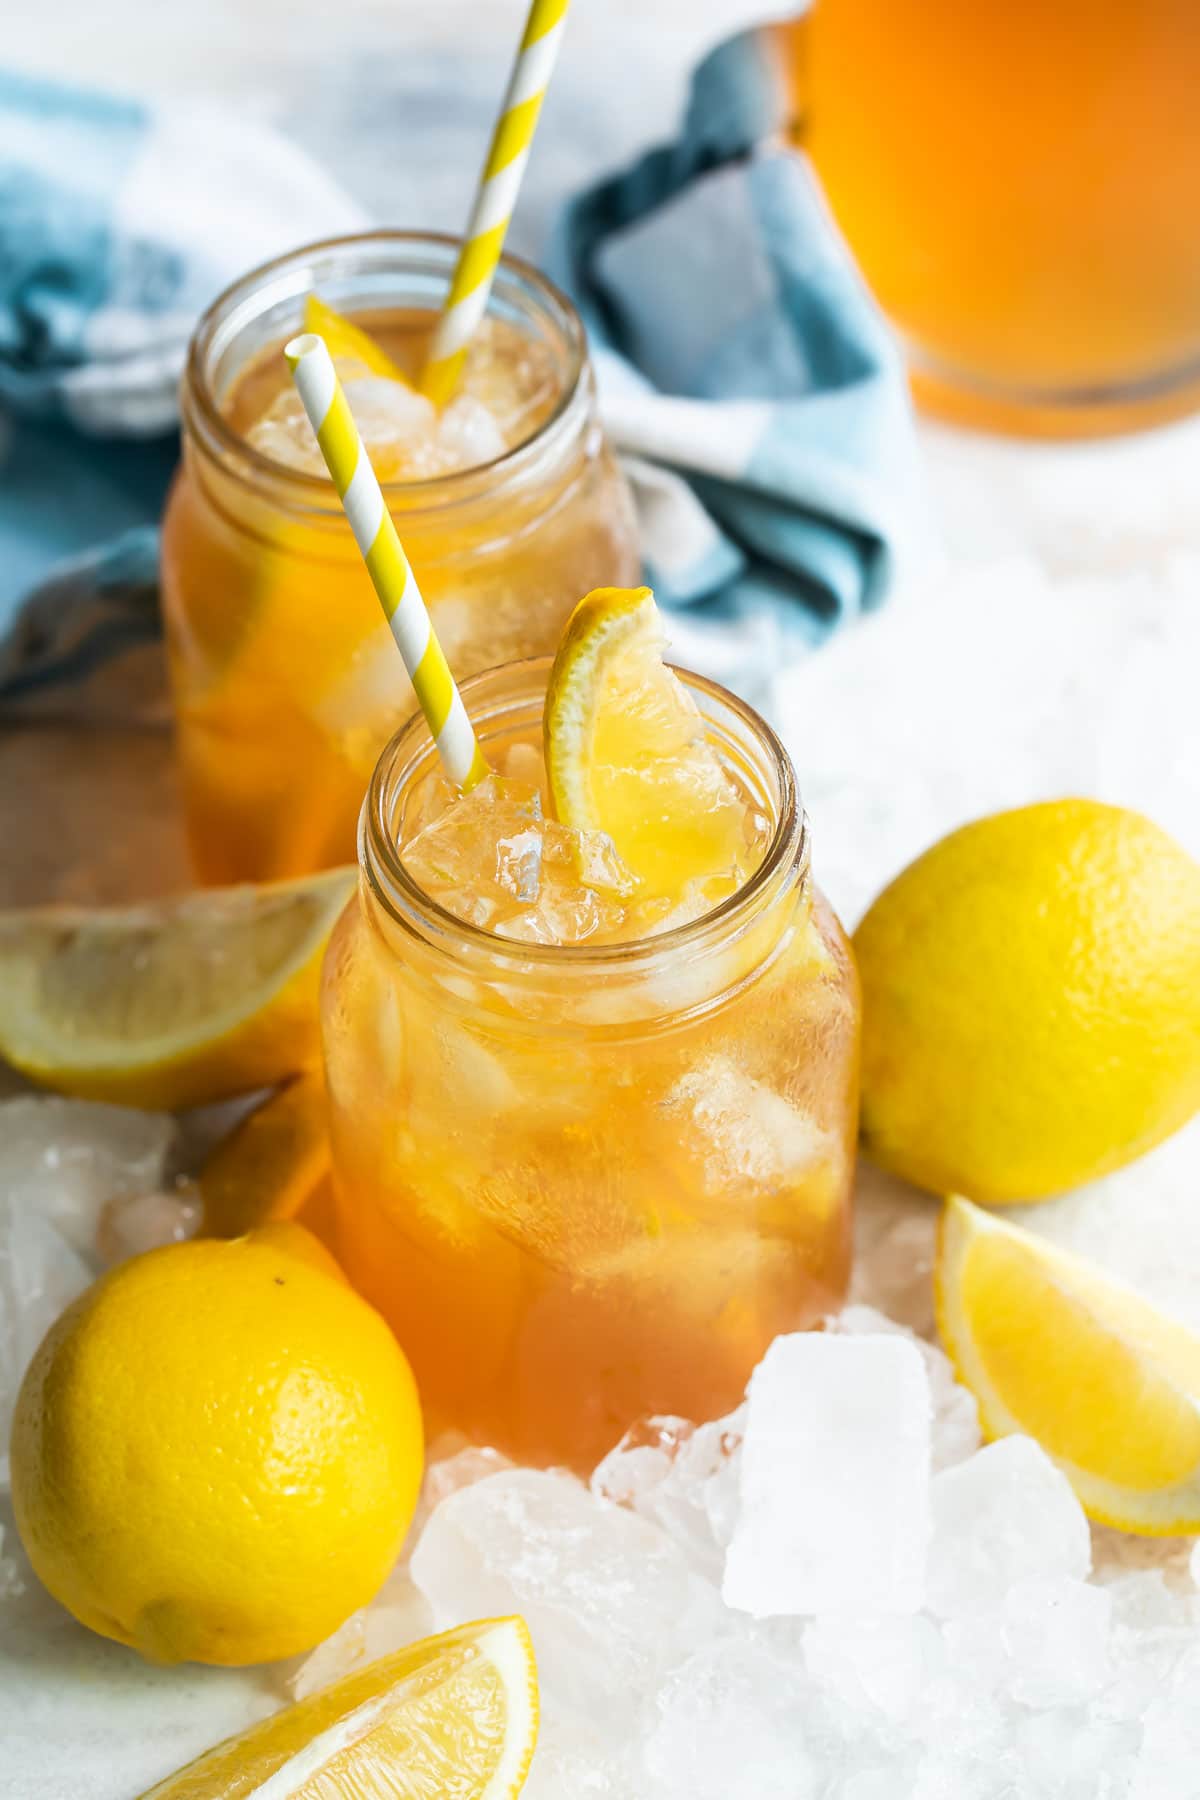 Glasses of arnold palmer (iced tea and lemonade).